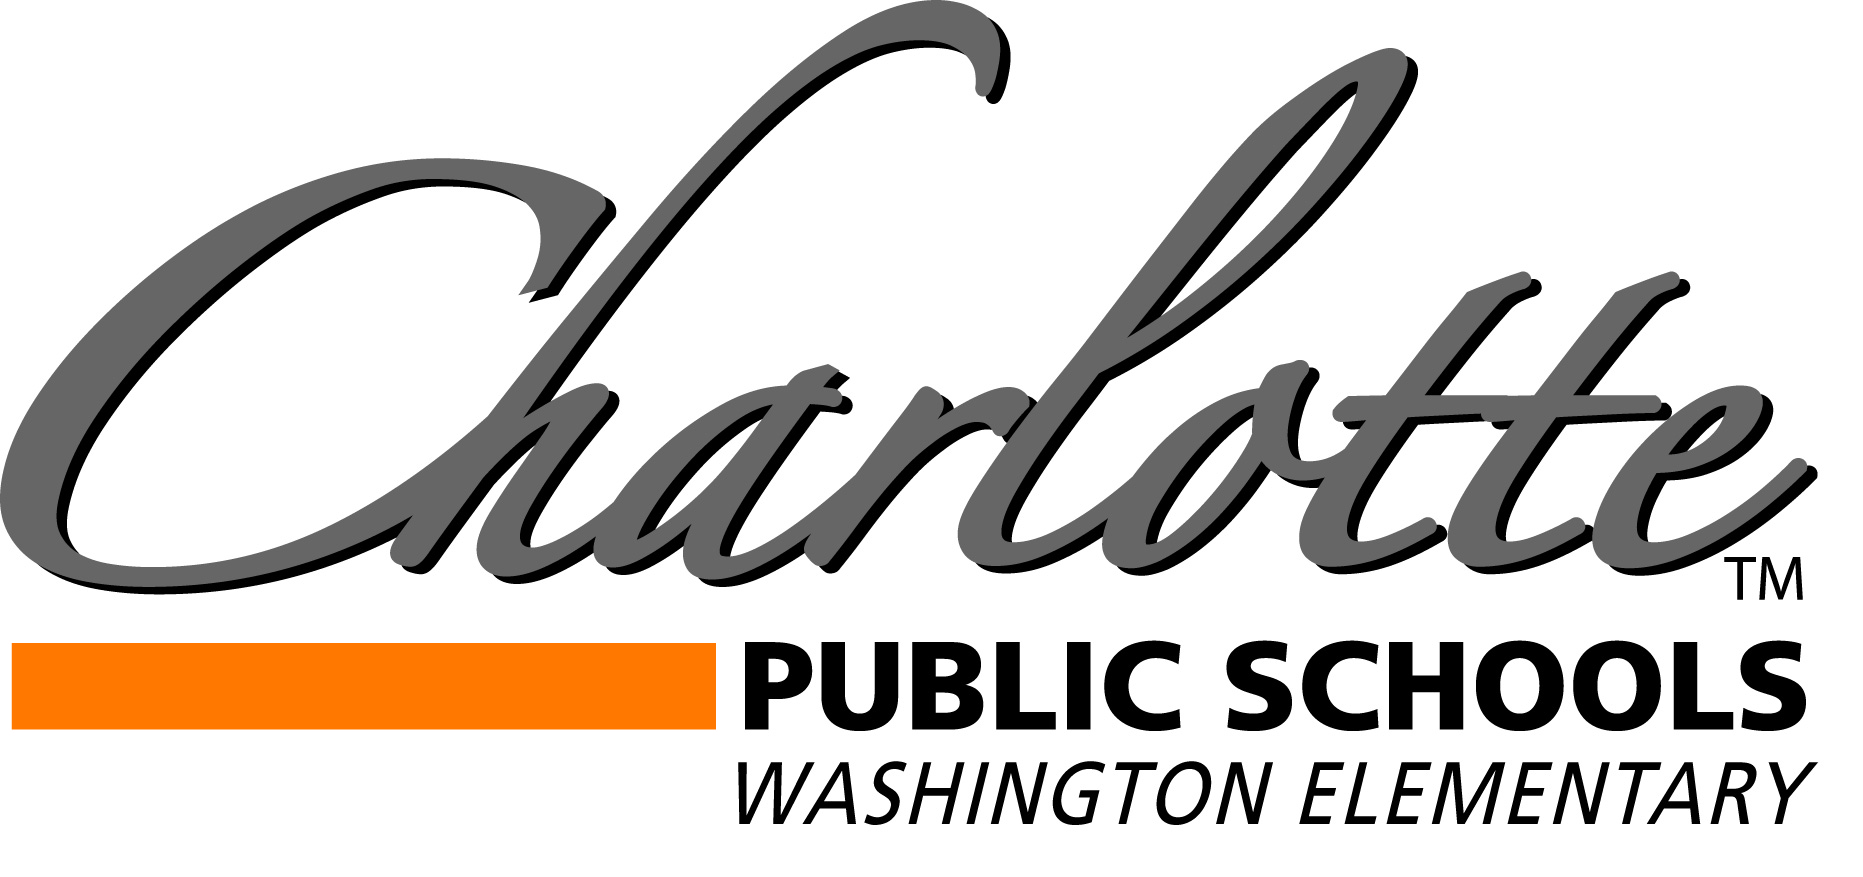 Charlotte Public Schools Washington Elementary